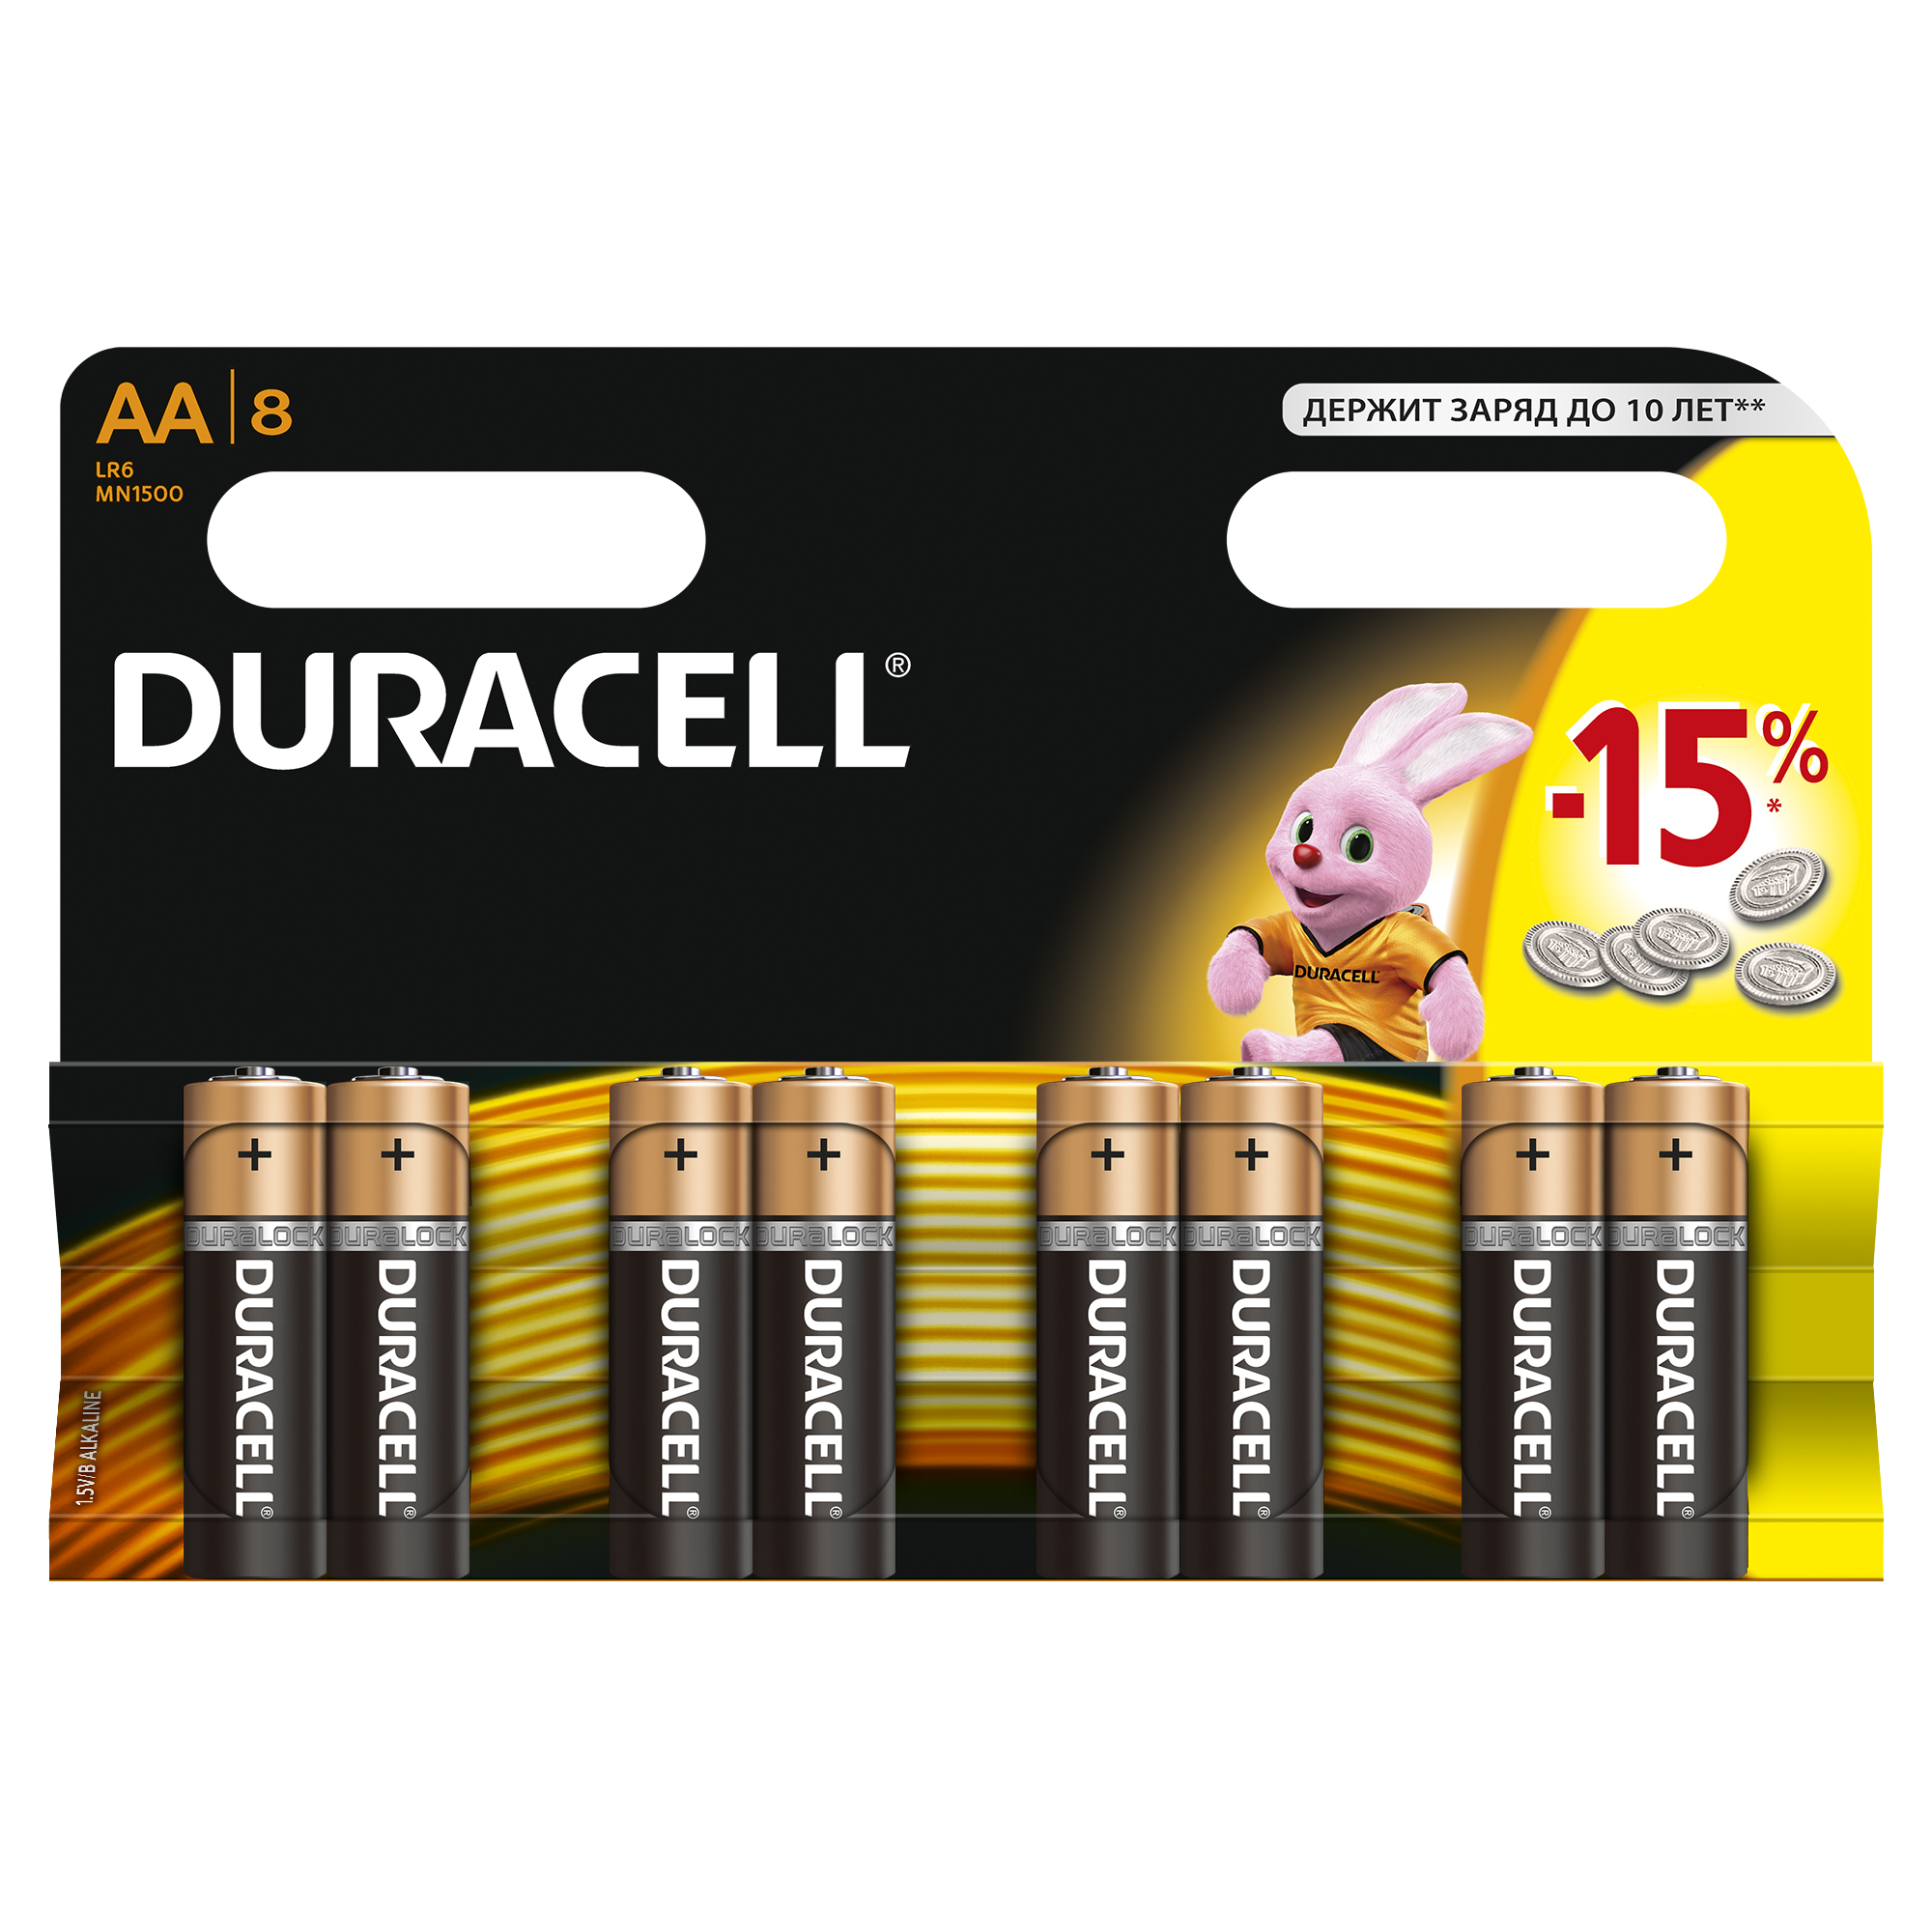 Duracell 81545410 Алкалиновая батарейка типа AA / LR6 / MN 1500" LR6-8BL BASIC